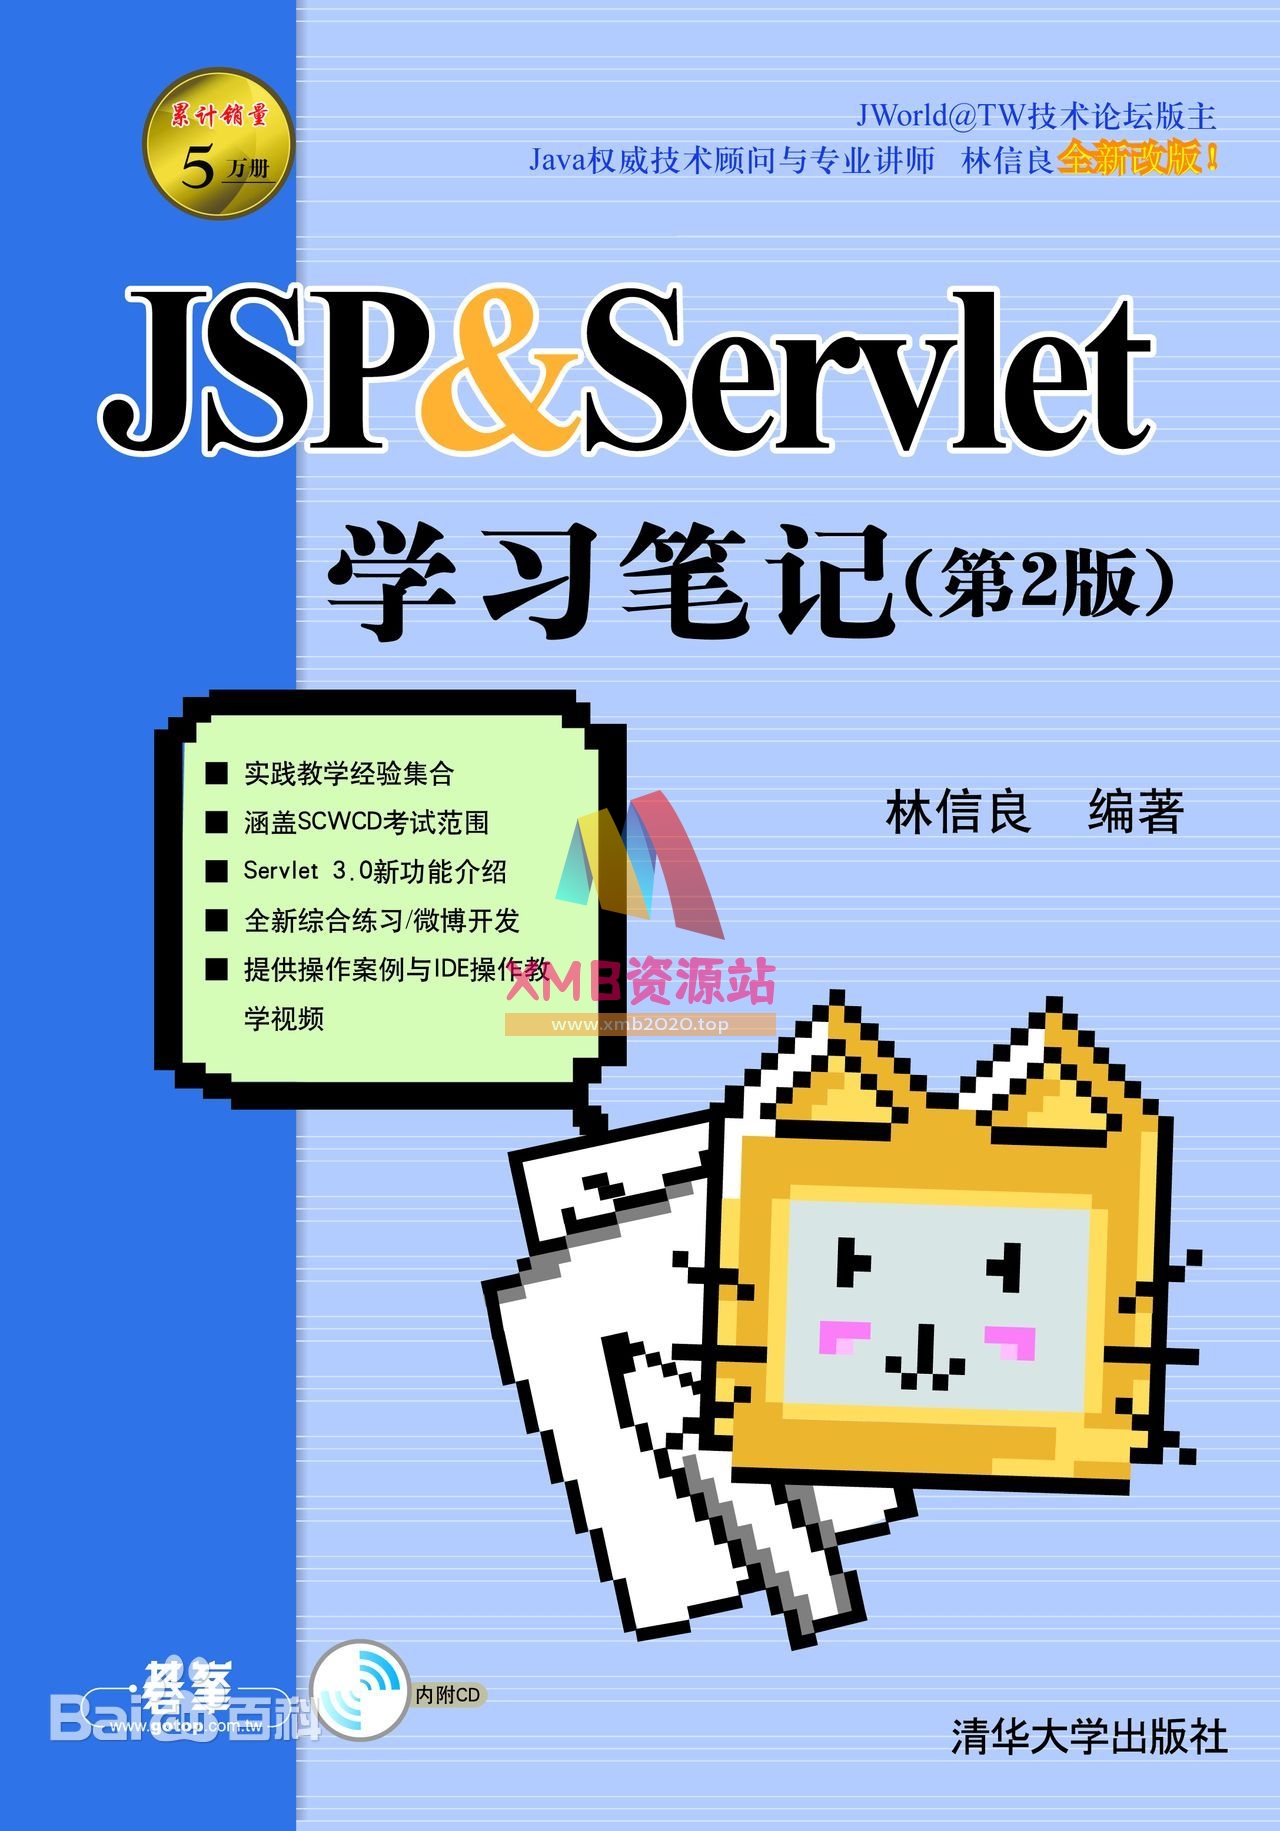 【xmb2020.top】JSP&Servlet学习笔记(第2版).pdf【XMB资源站】